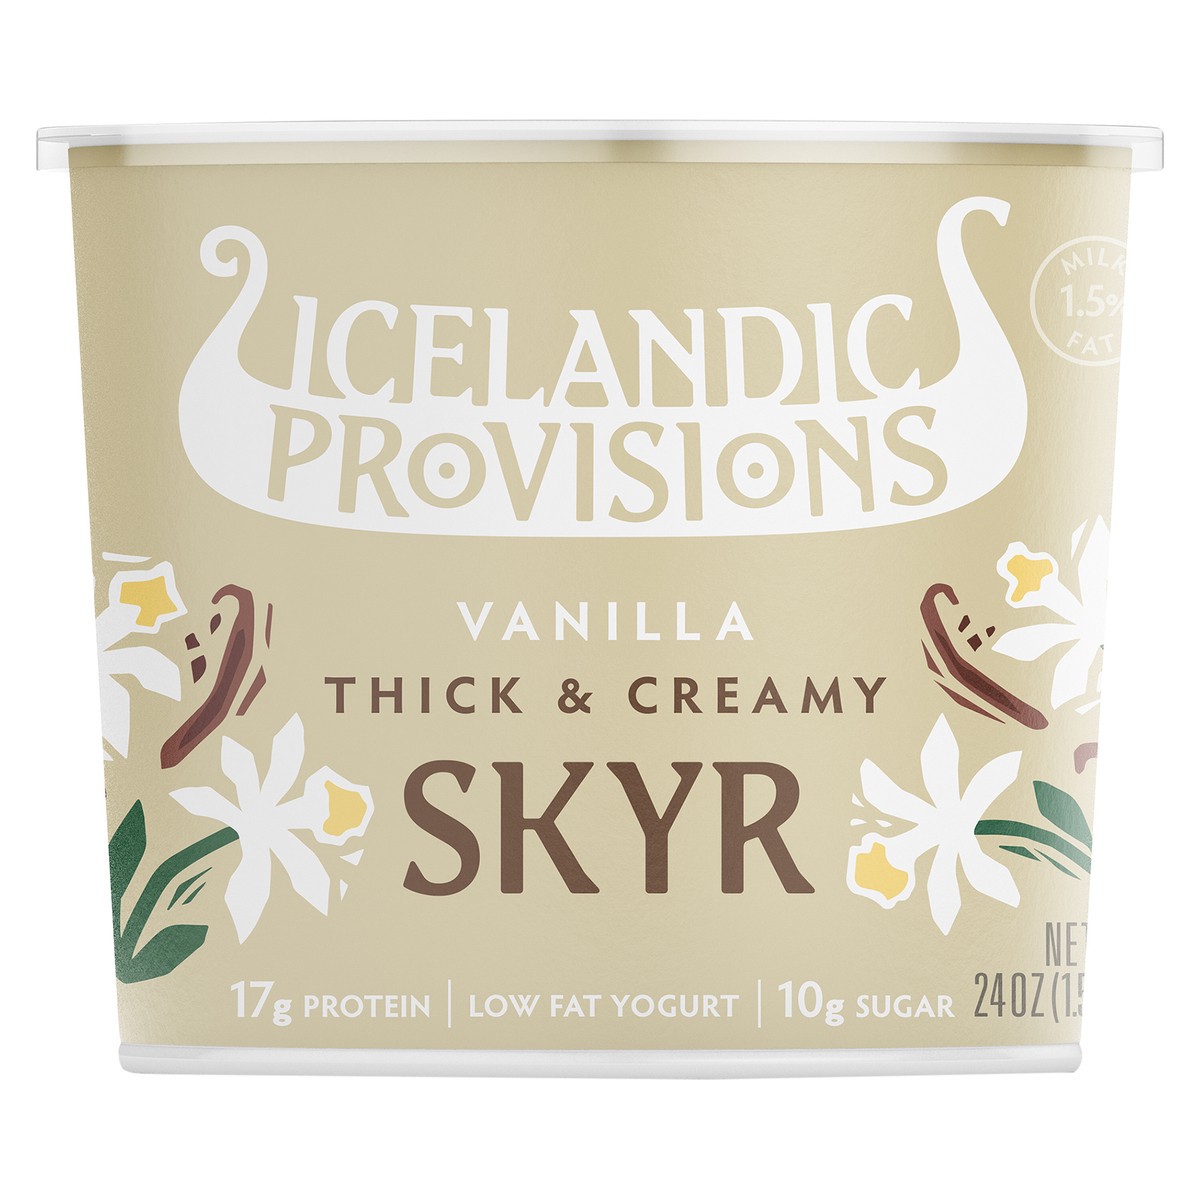 slide 1 of 7, Icelandic Provisions Vanilla Thick & Creamy Low Fat Skyr 24 oz, 24 oz